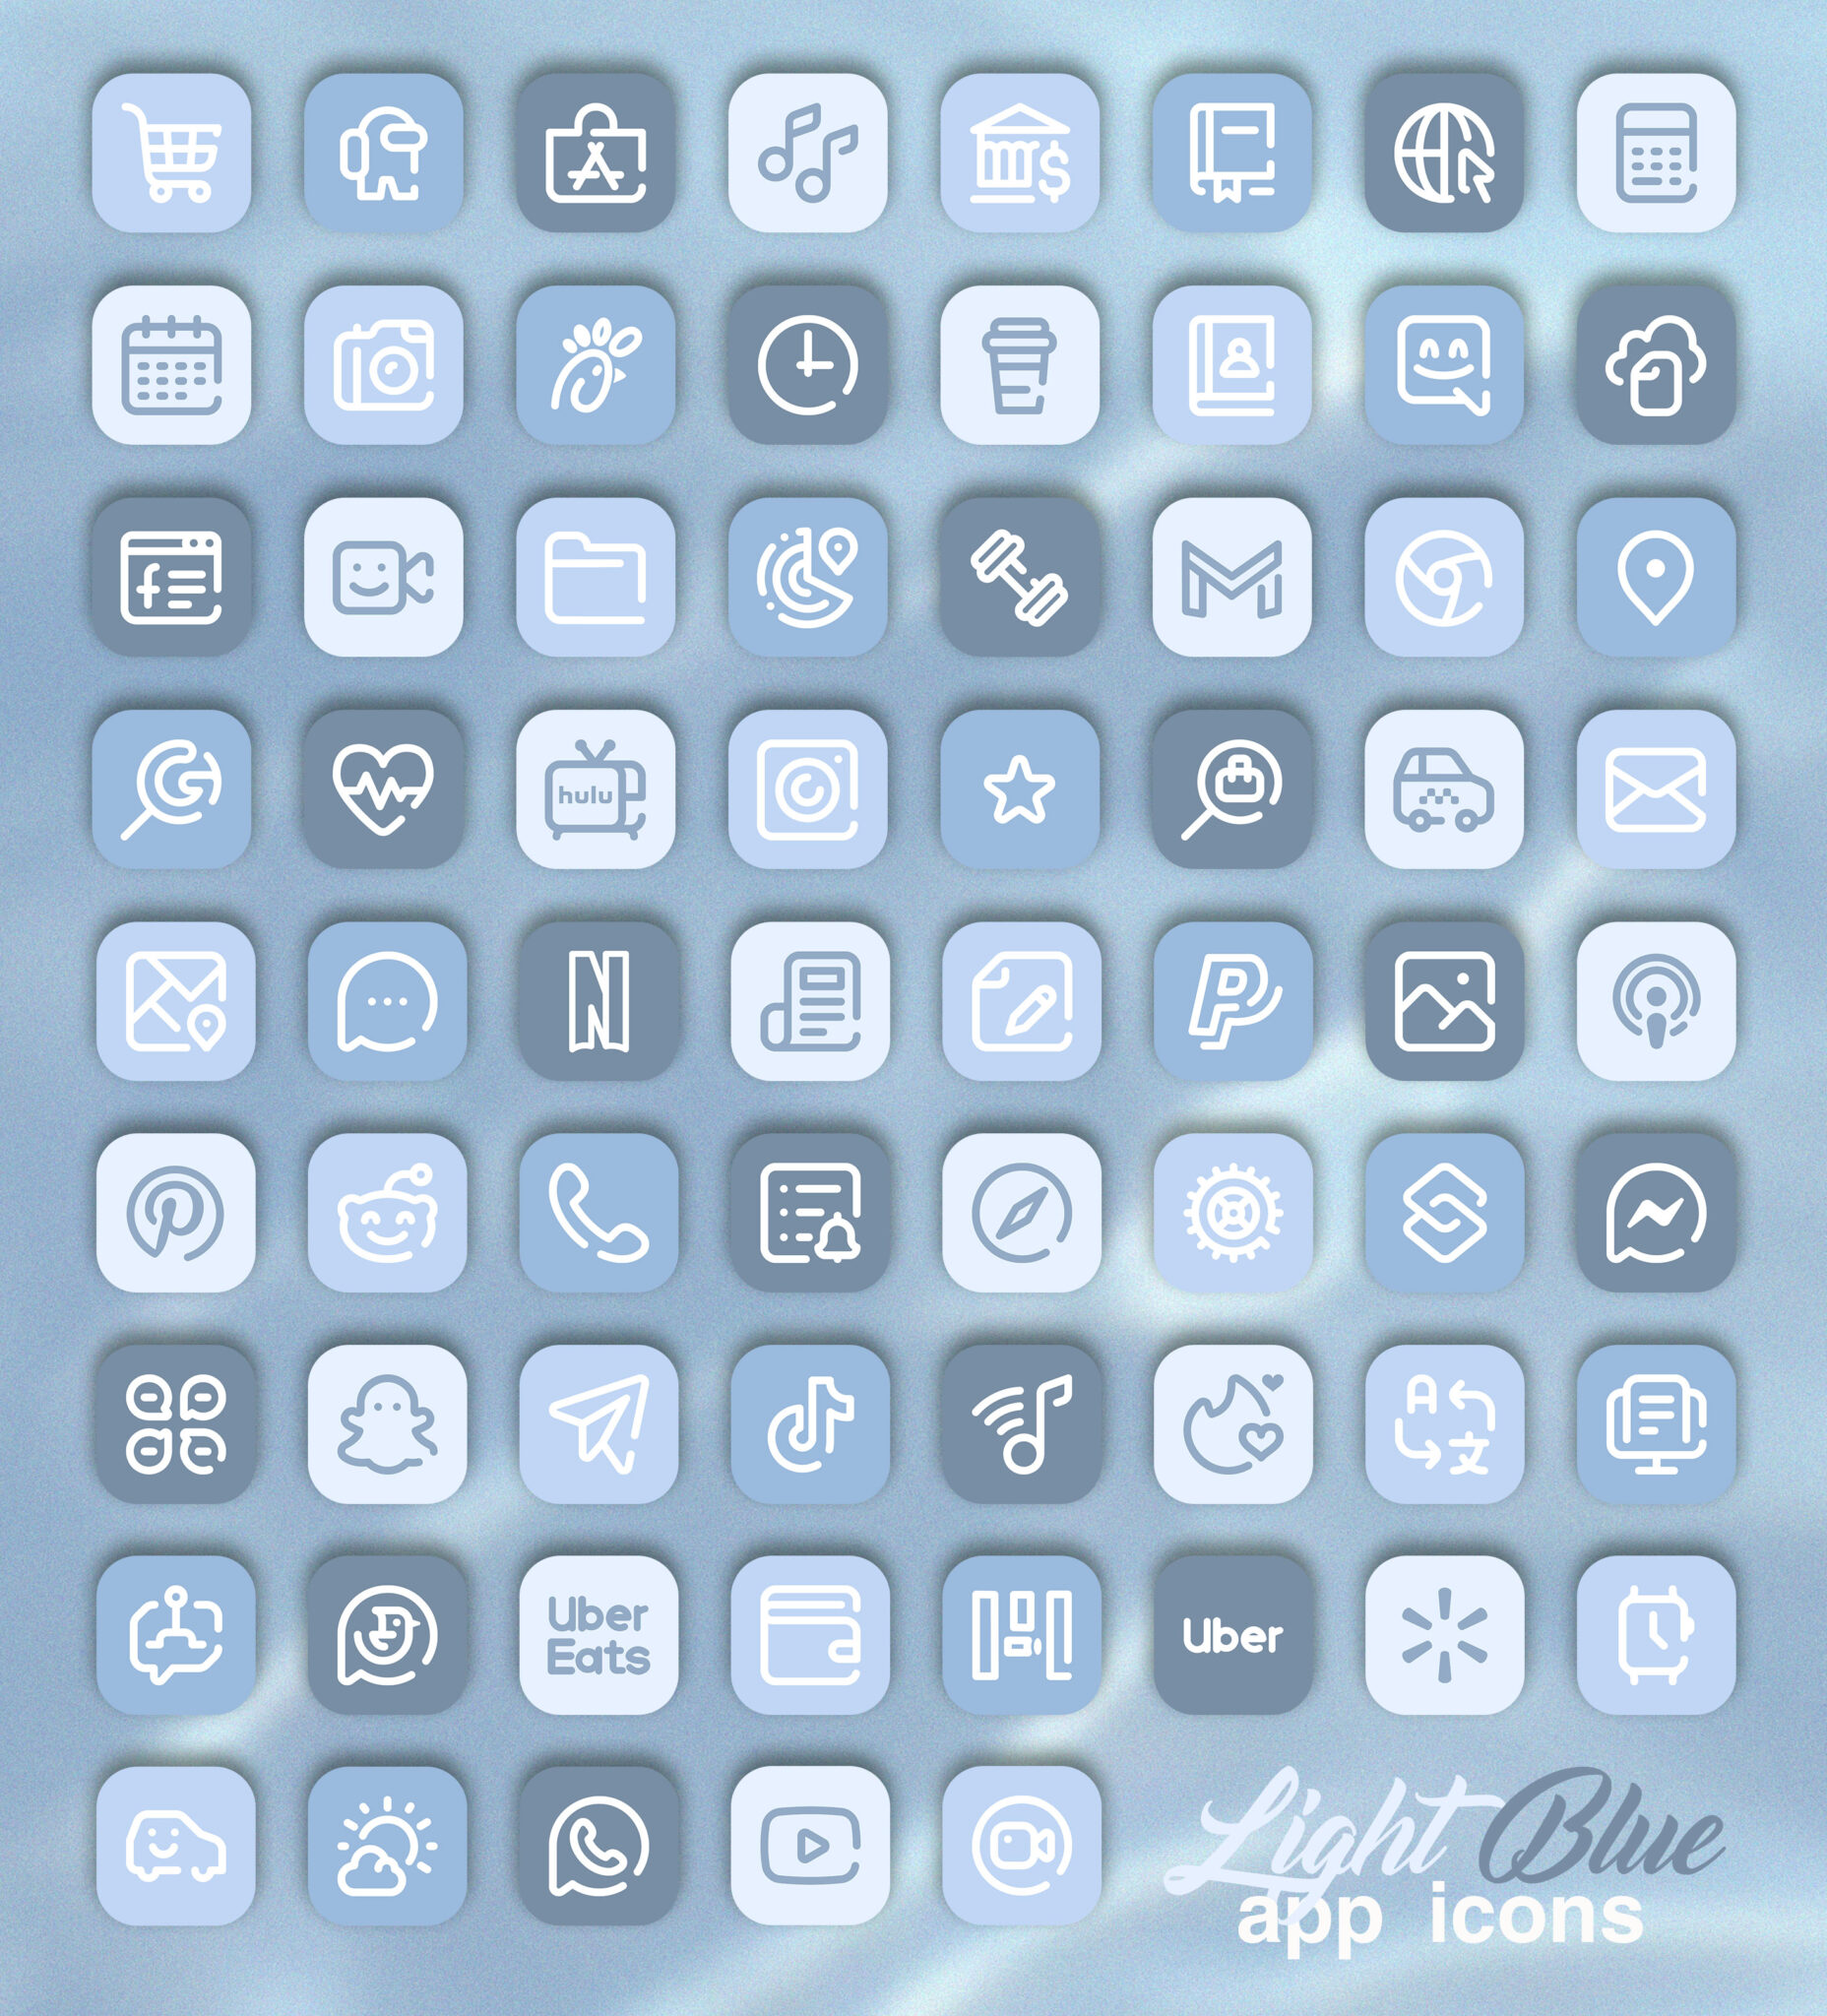 shortcuts icon aesthetic dark blue